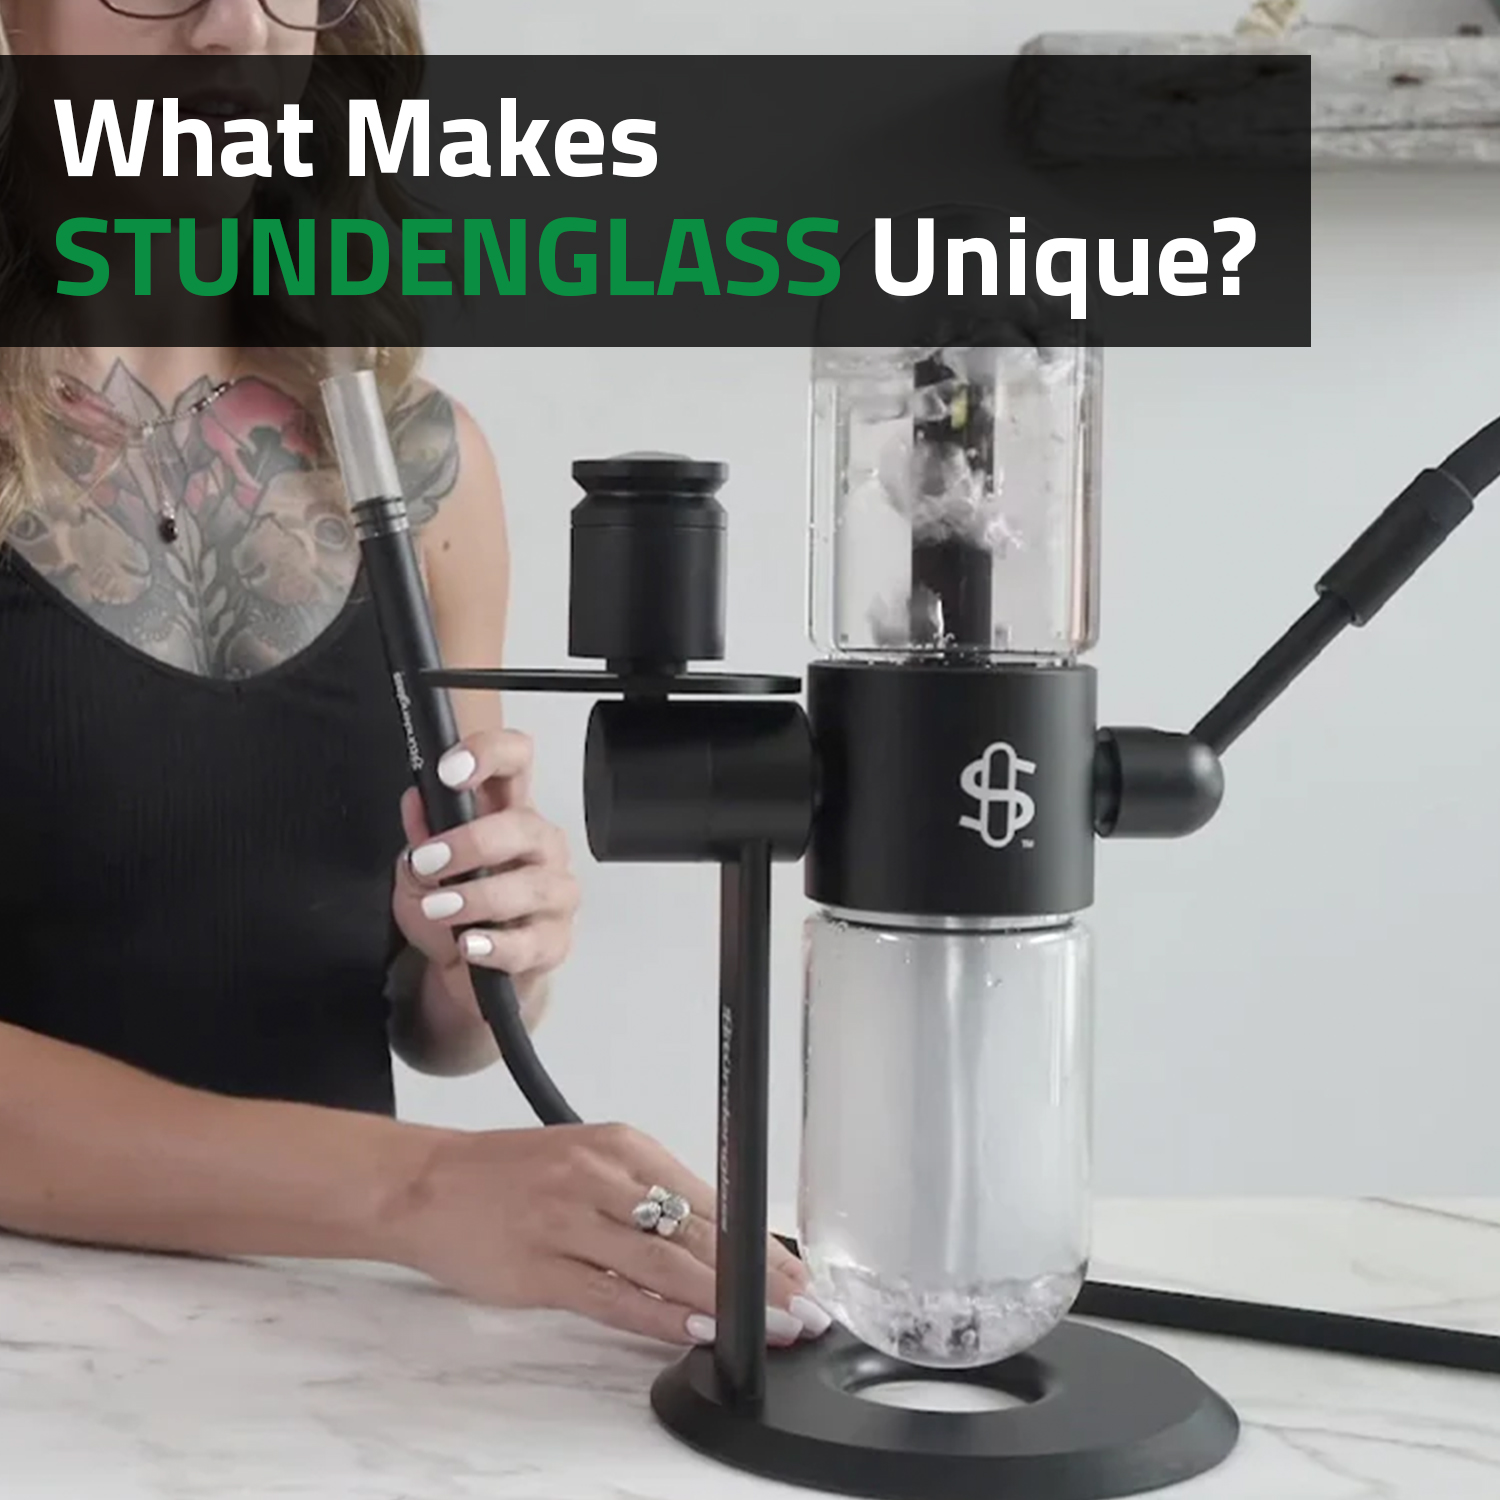 What Makes Stundenglass Unique